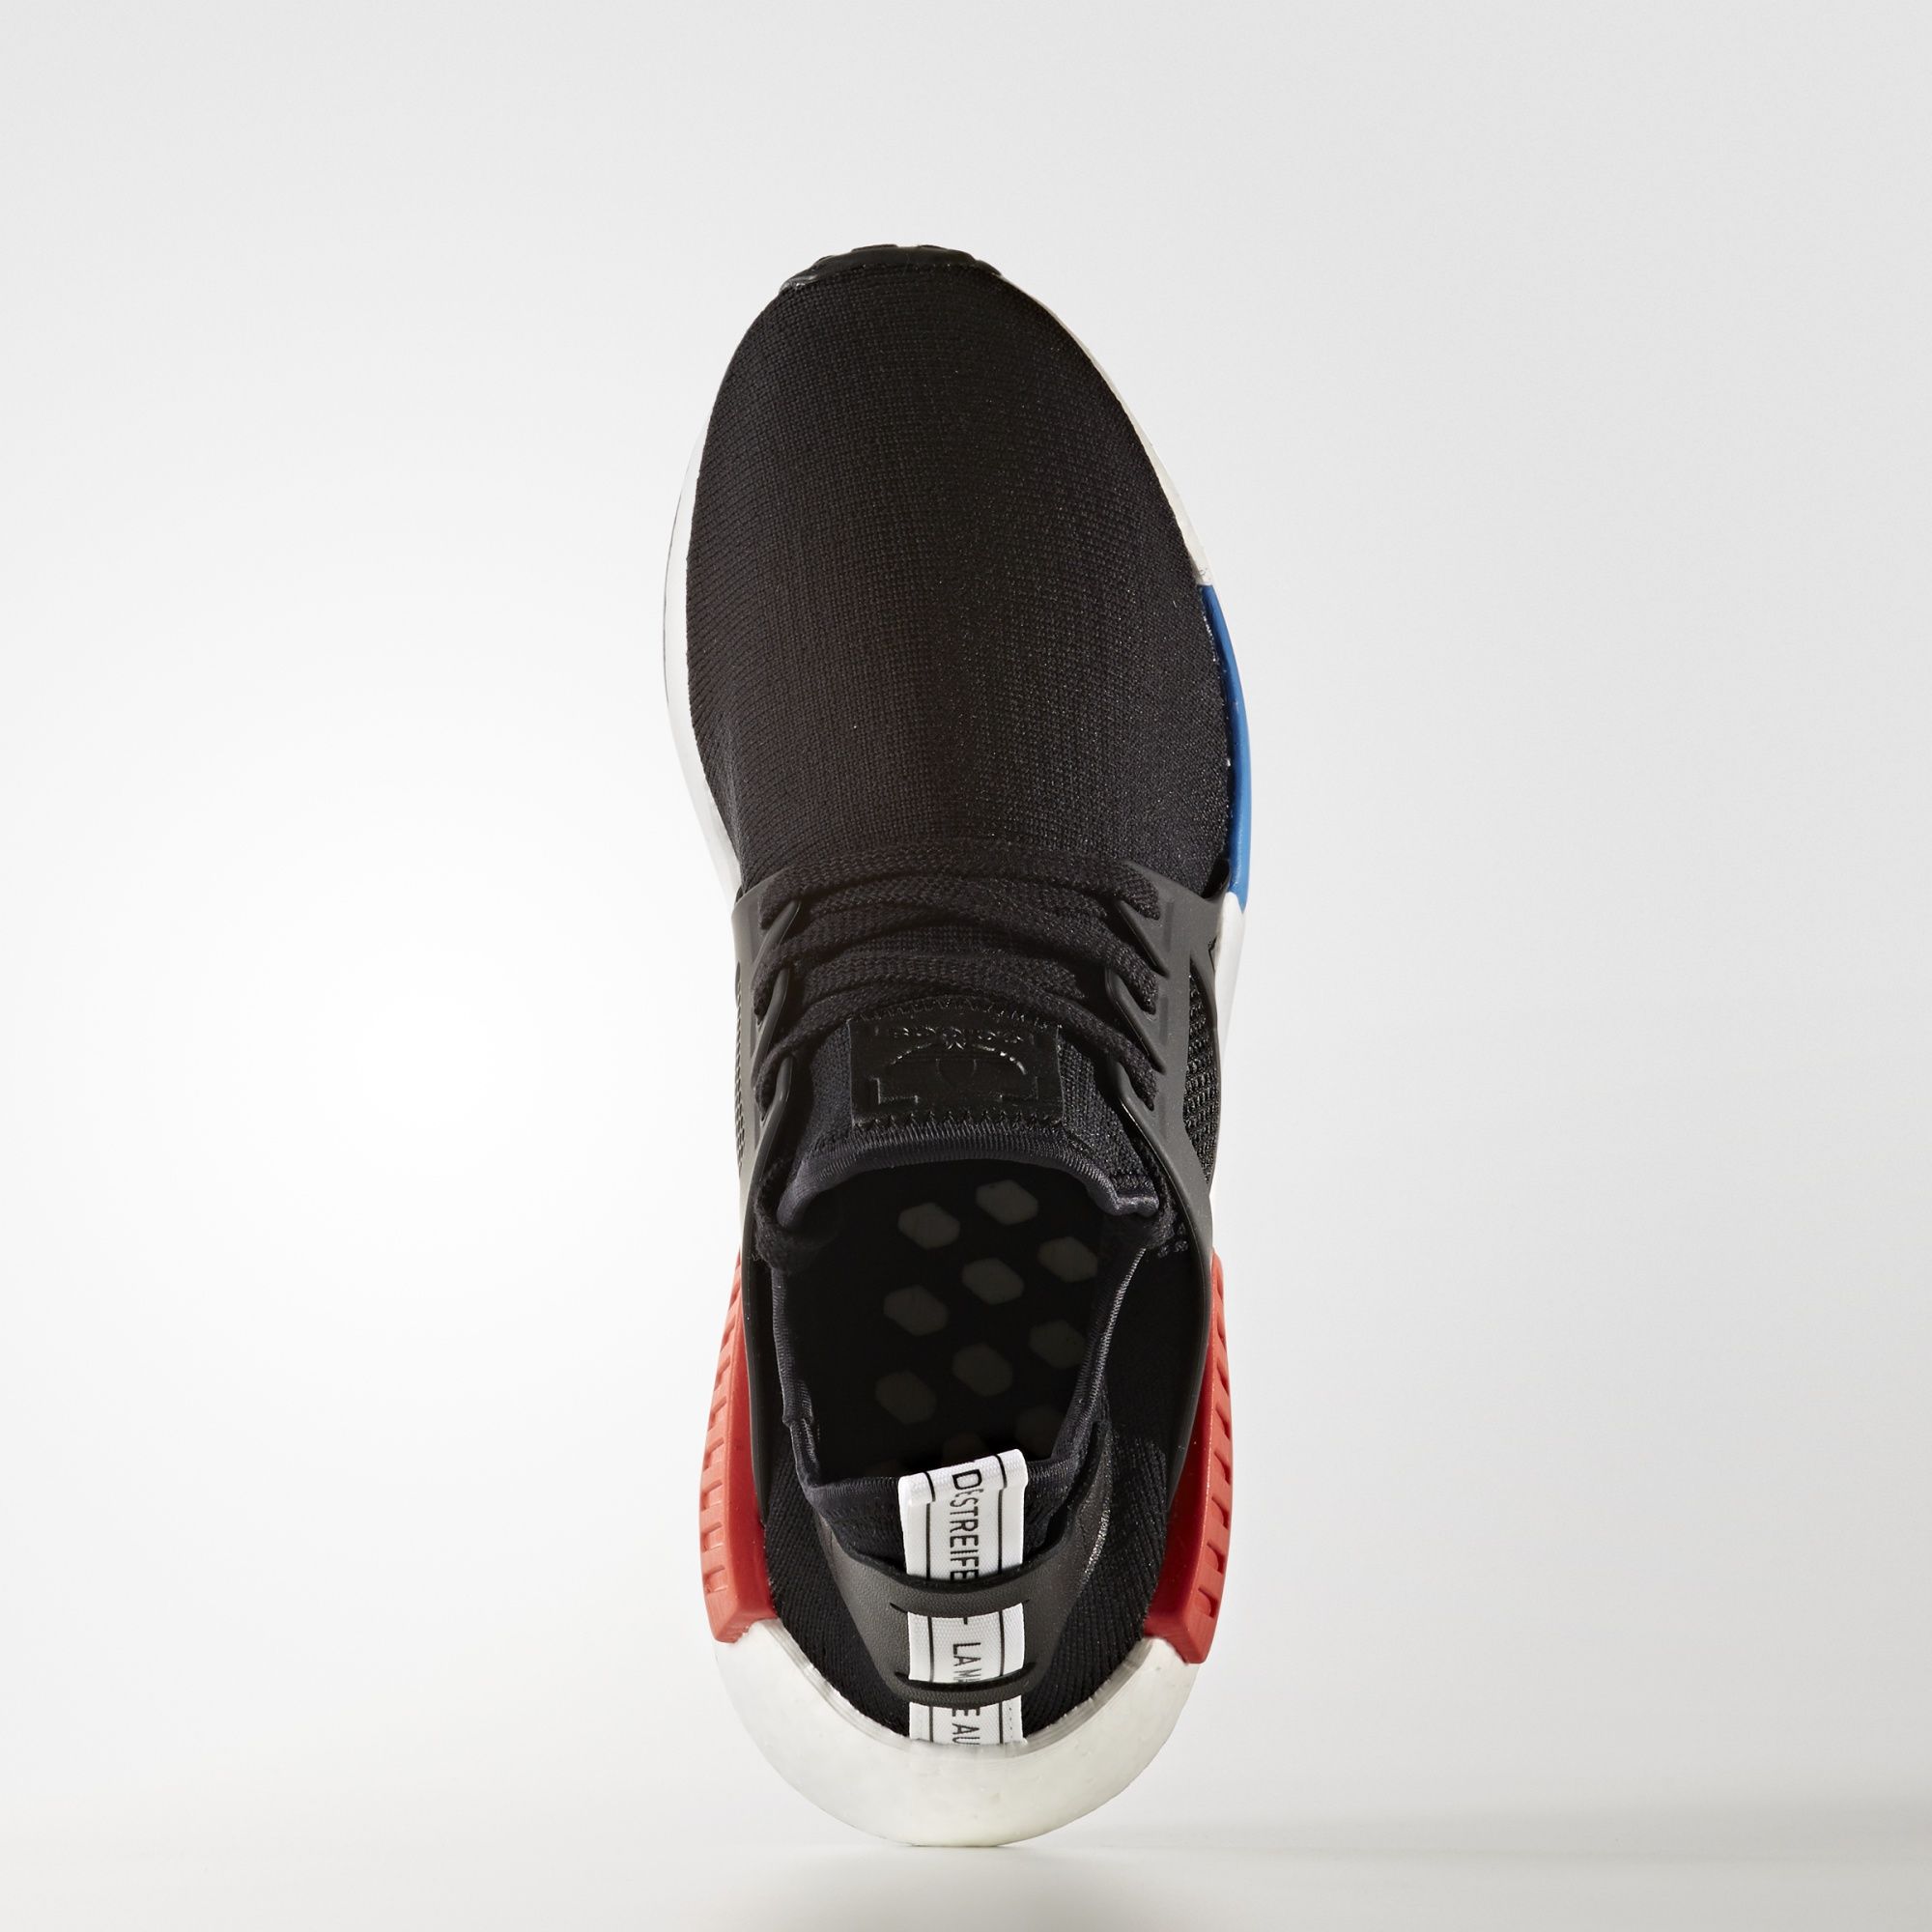 Adidas NMD_XR1
Core Black / Footwear White